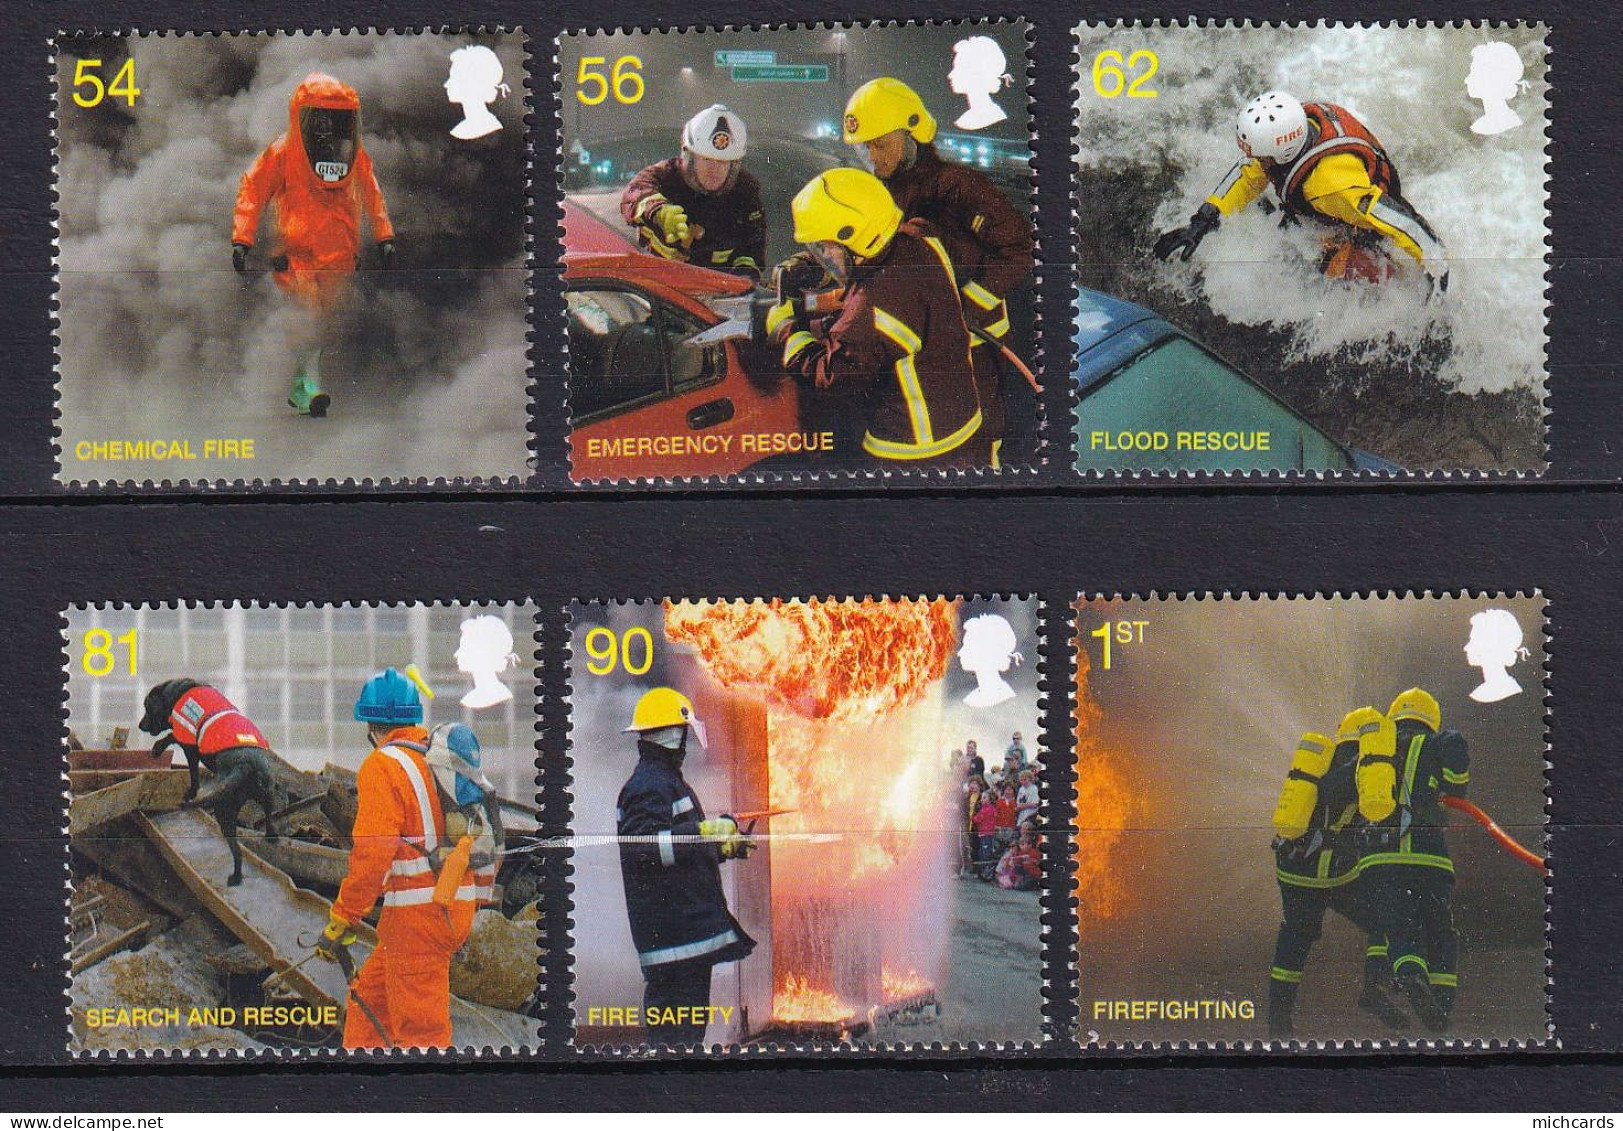 194 GRANDE BRETAGNE 2009 - Y&T 3176/21 - Sapeurs Pompiers - Neuf ** (MNH) Sans Charniere - Ongebruikt